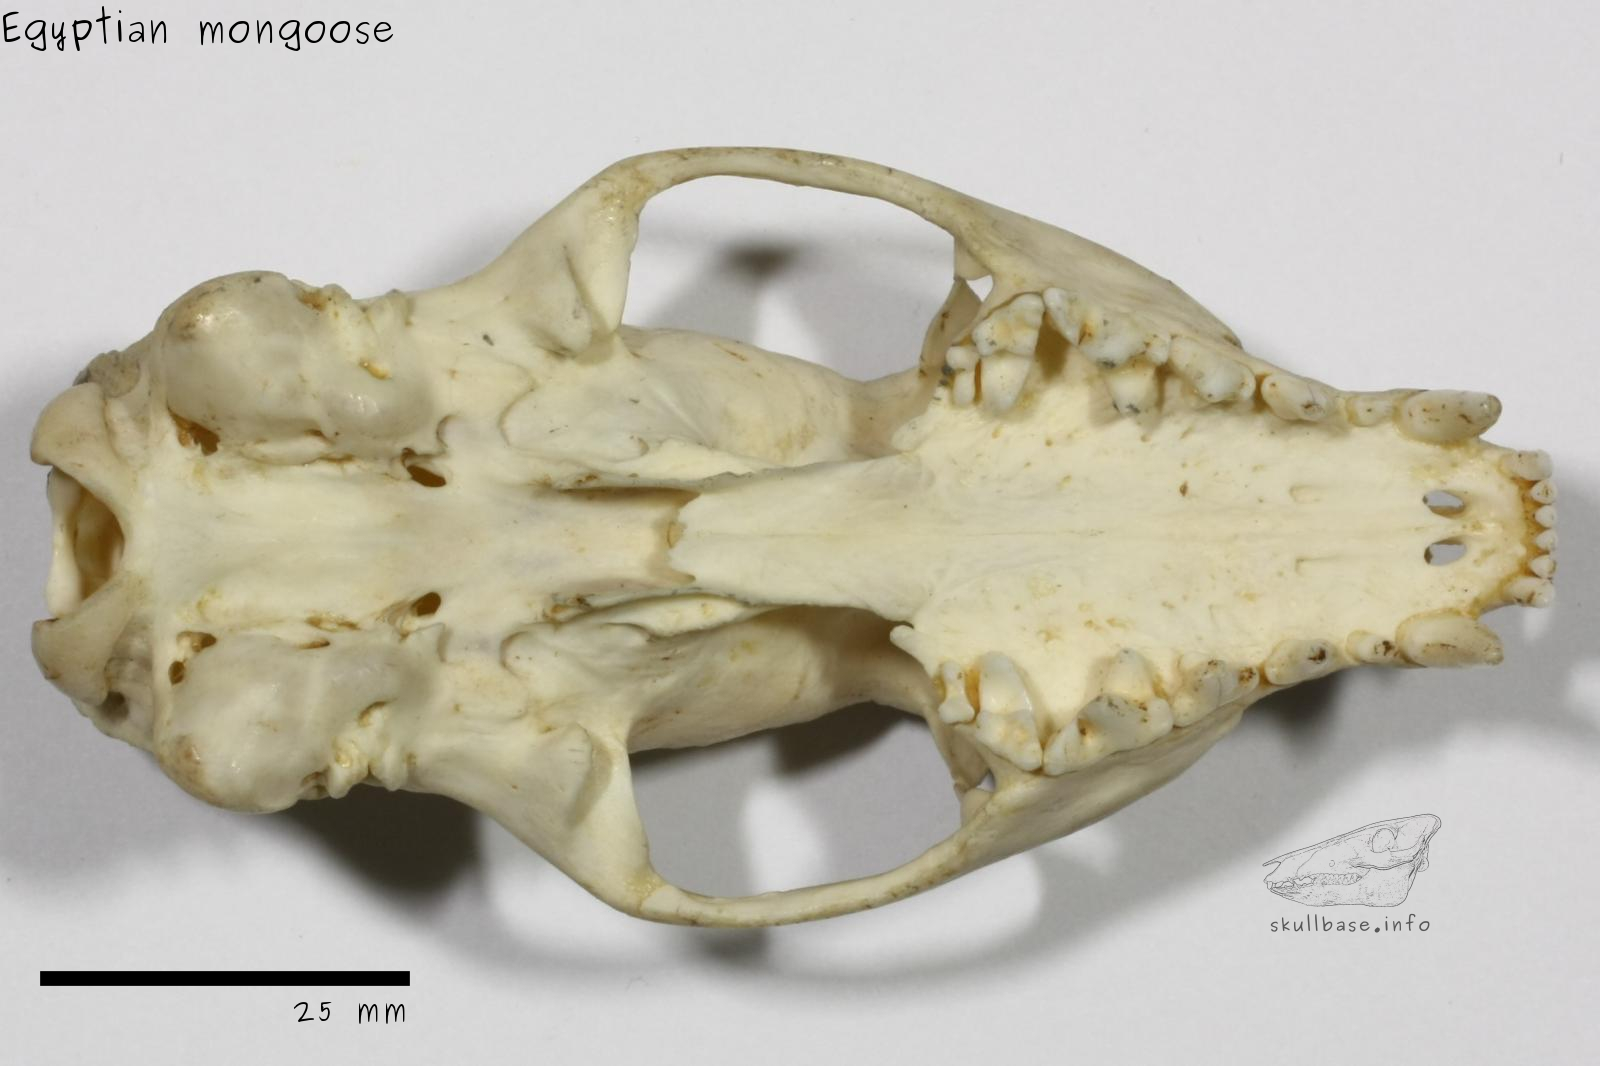 Egyptian mongoose (Herpestes ichneumon) skull ventral view